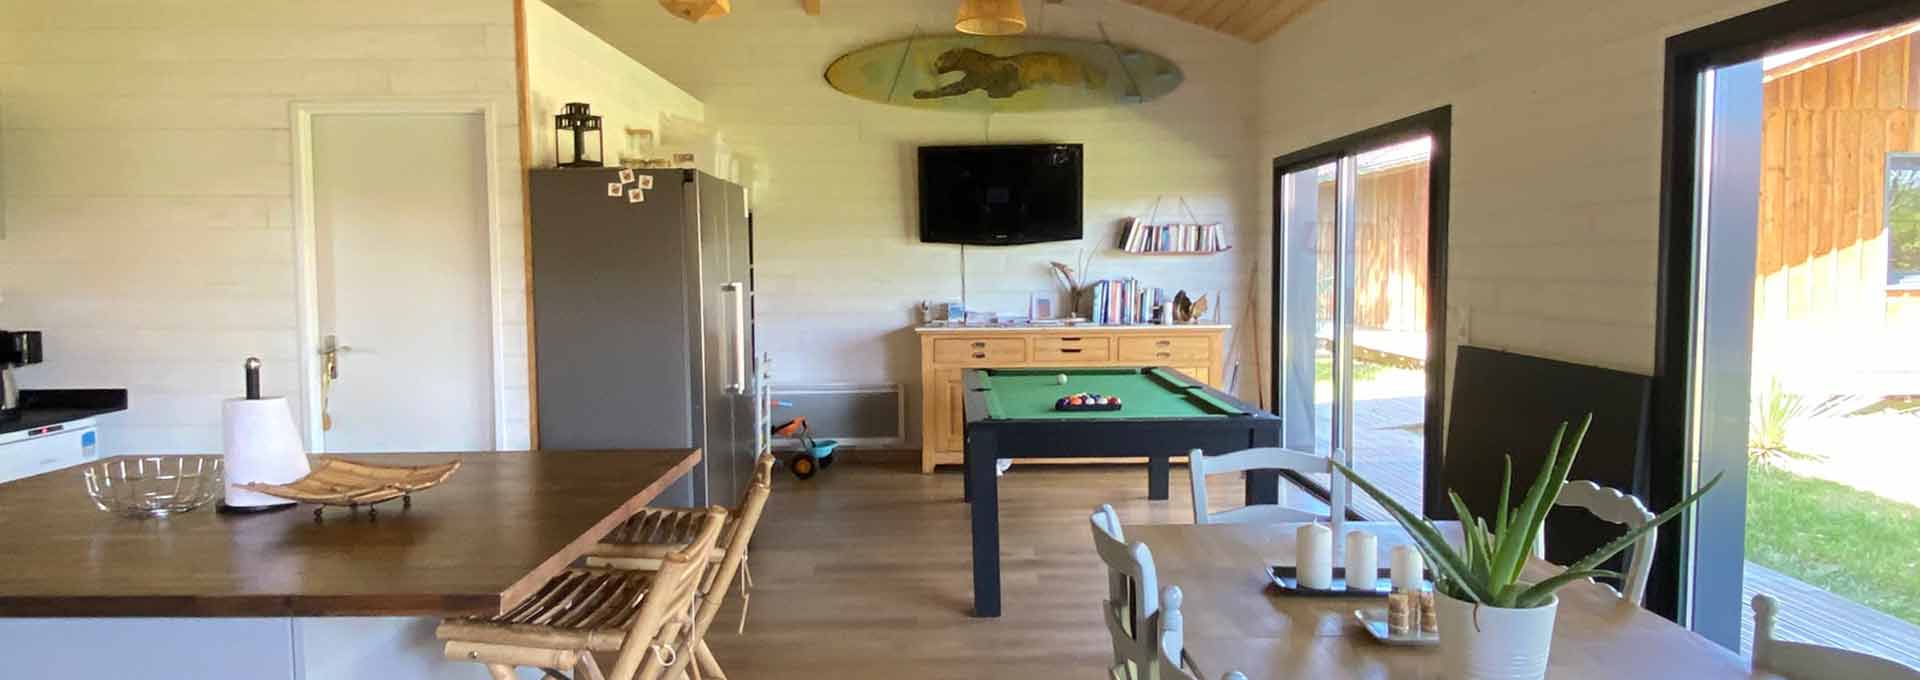 salle-commune-billard-cuisine-tv-nature-surf-camp